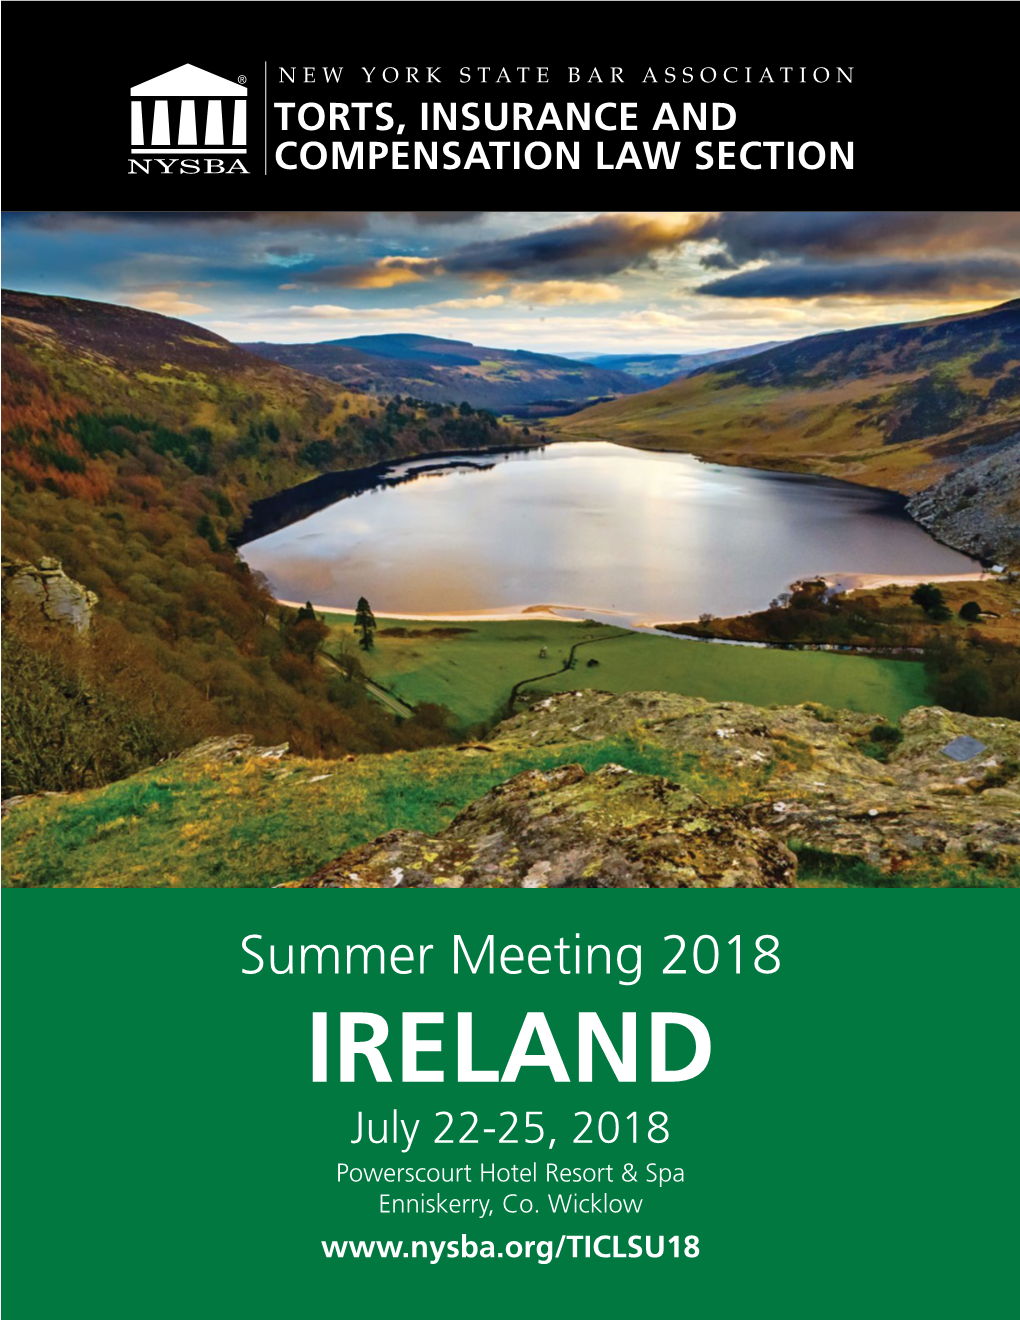 IRELAND July 22-25, 2018 Powerscourt Hotel Resort & Spa Enniskerry, Co